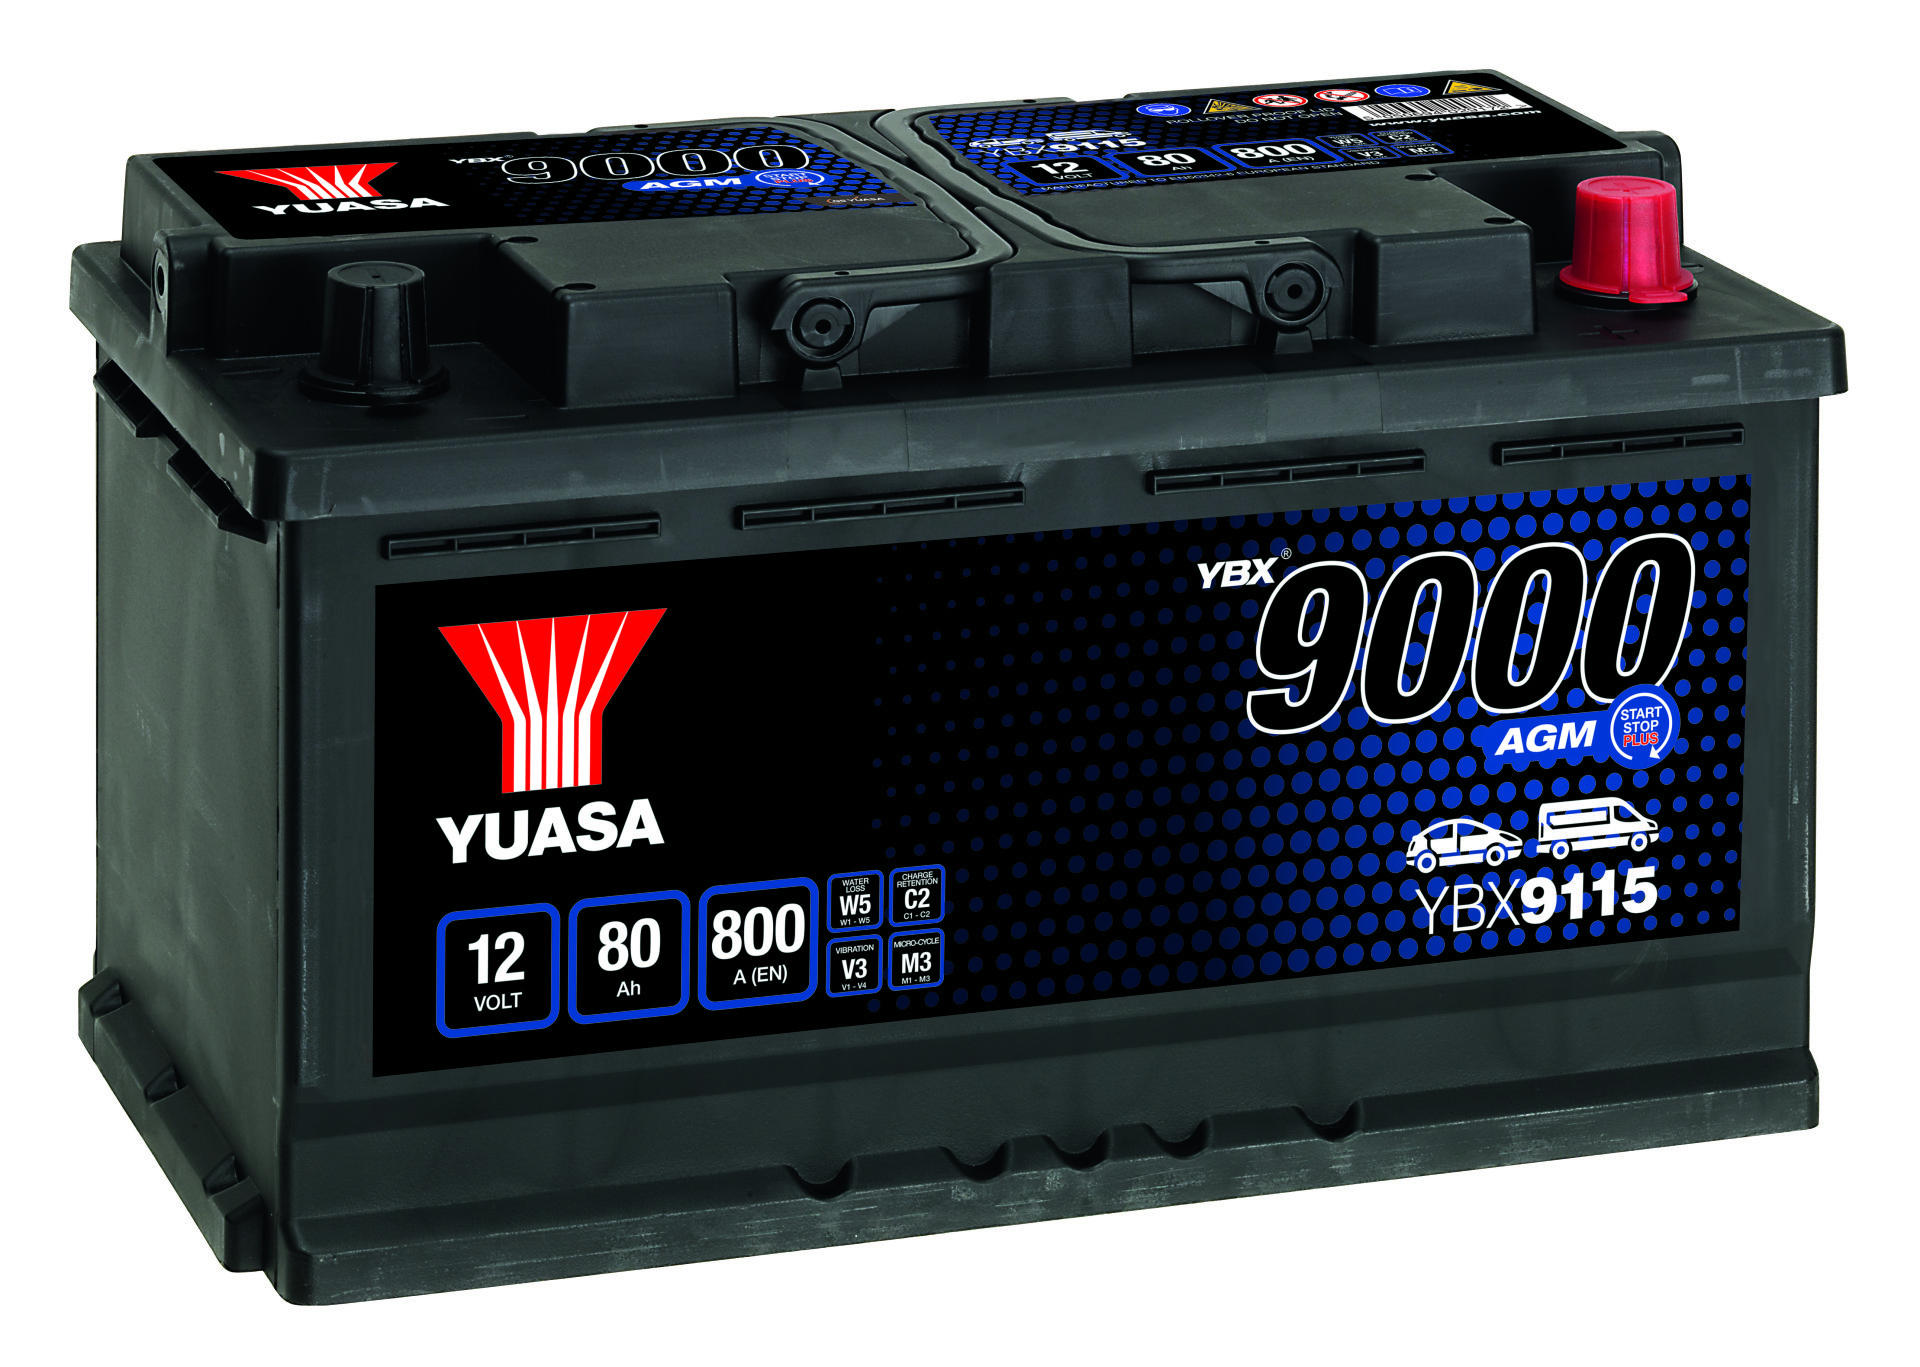 YUASA Autobatterie, Starterbatterie 12V 80Ah 800A 4.55L